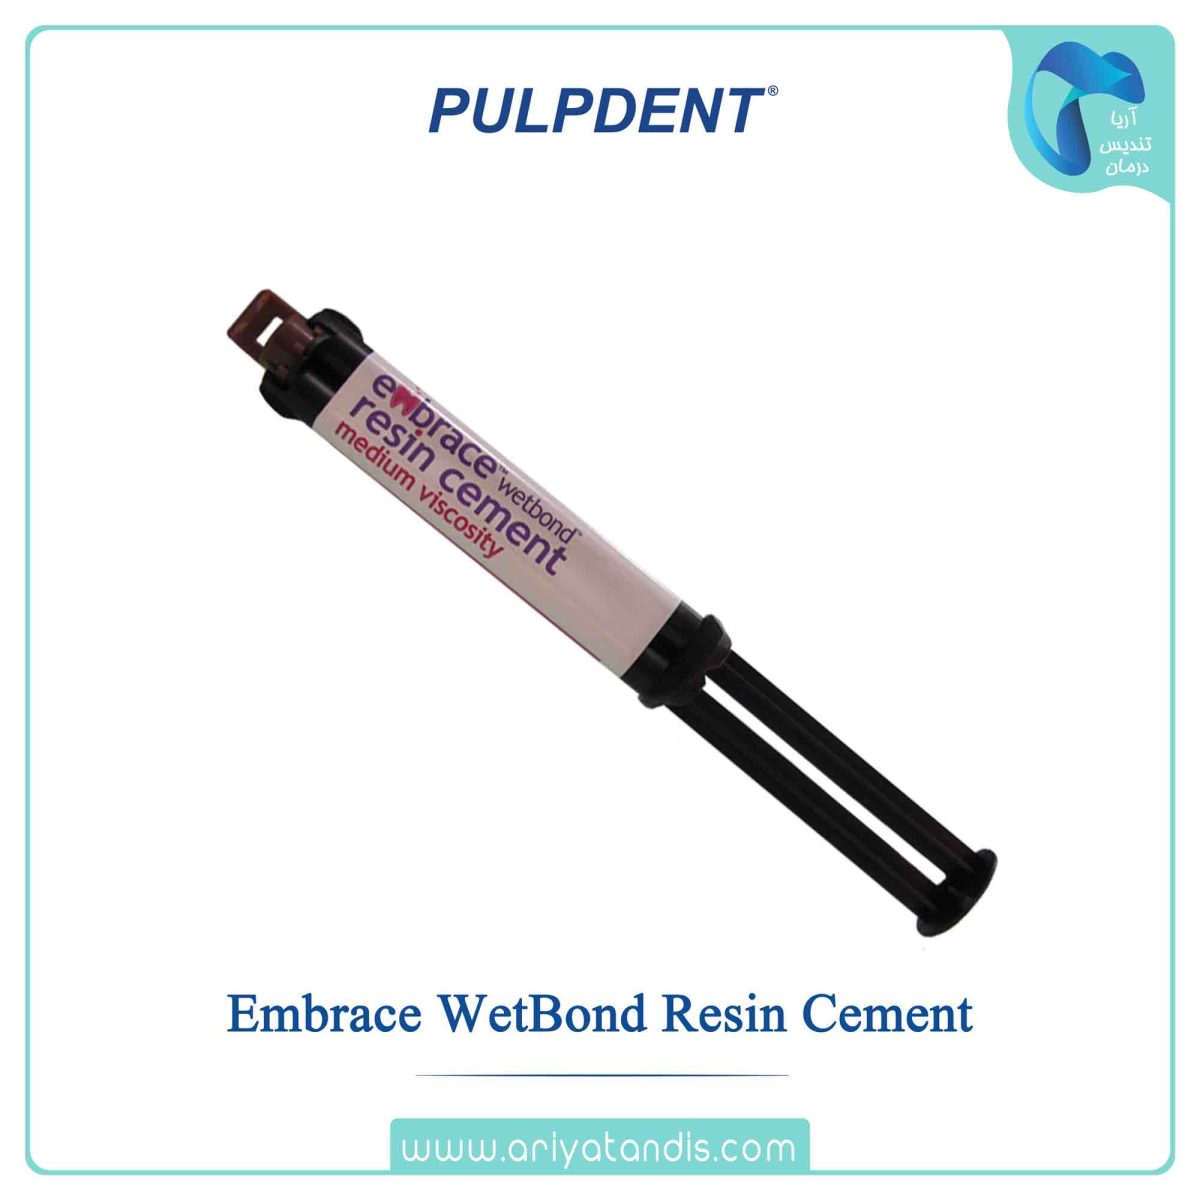 قیمت سمان رزینی دوال کیور پالپ دنت، Pulpdent Embrace WetBond Resin Cement